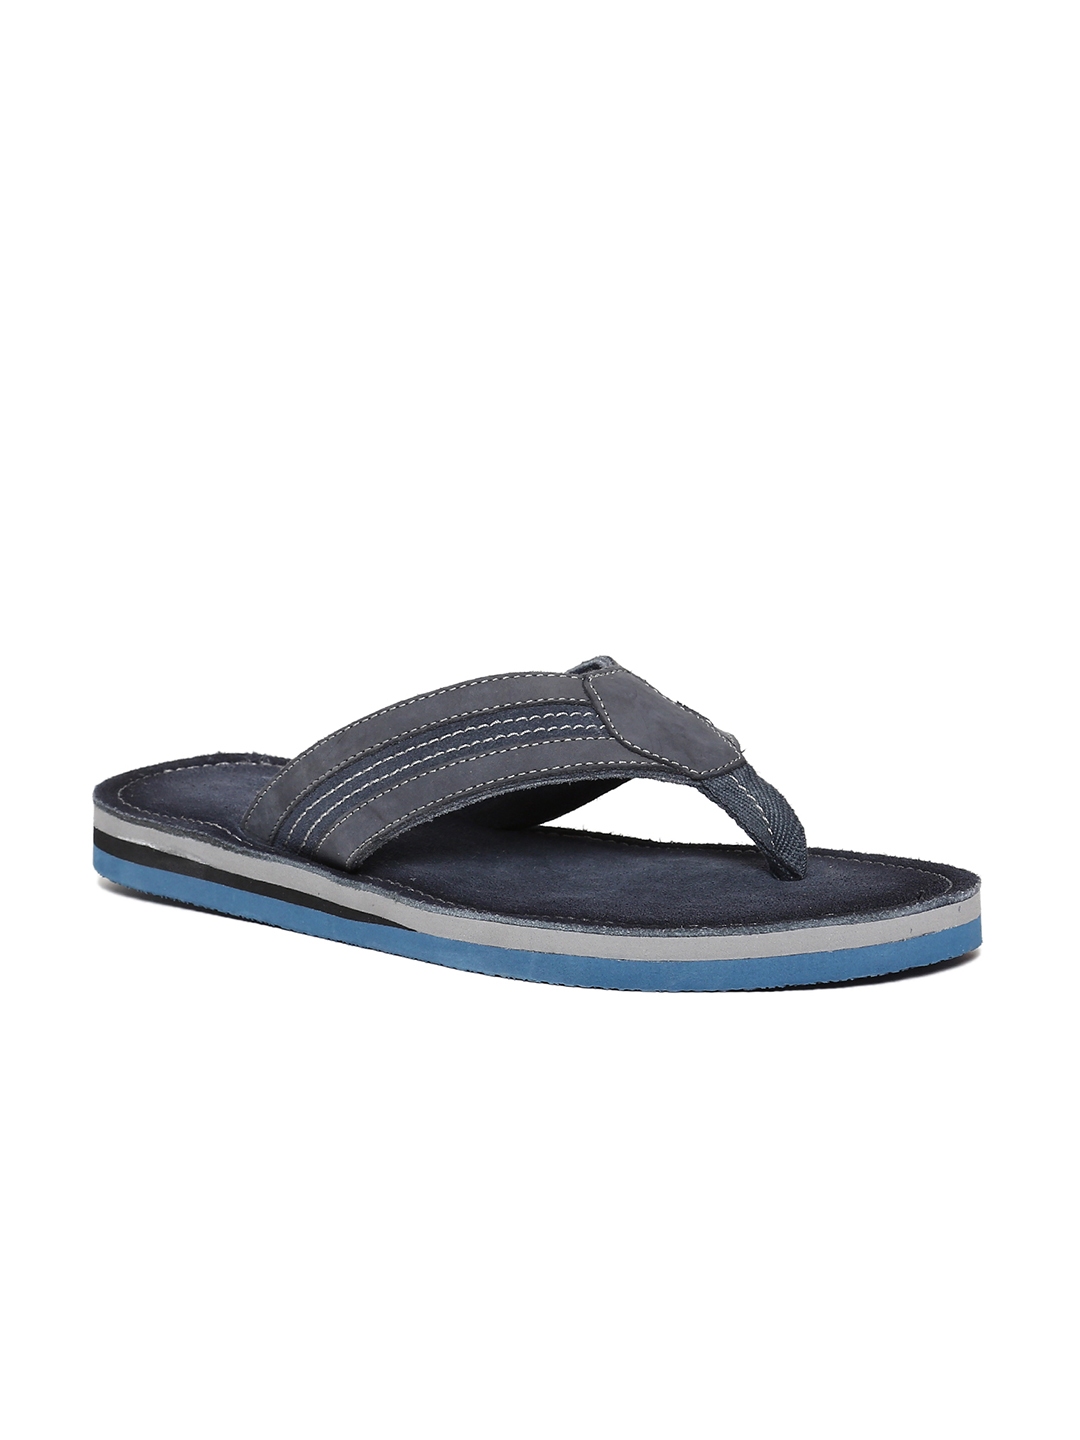 Buy U.S. Polo Assn. Men Blue Sandals - Sandals for Men 10601738 | Myntra